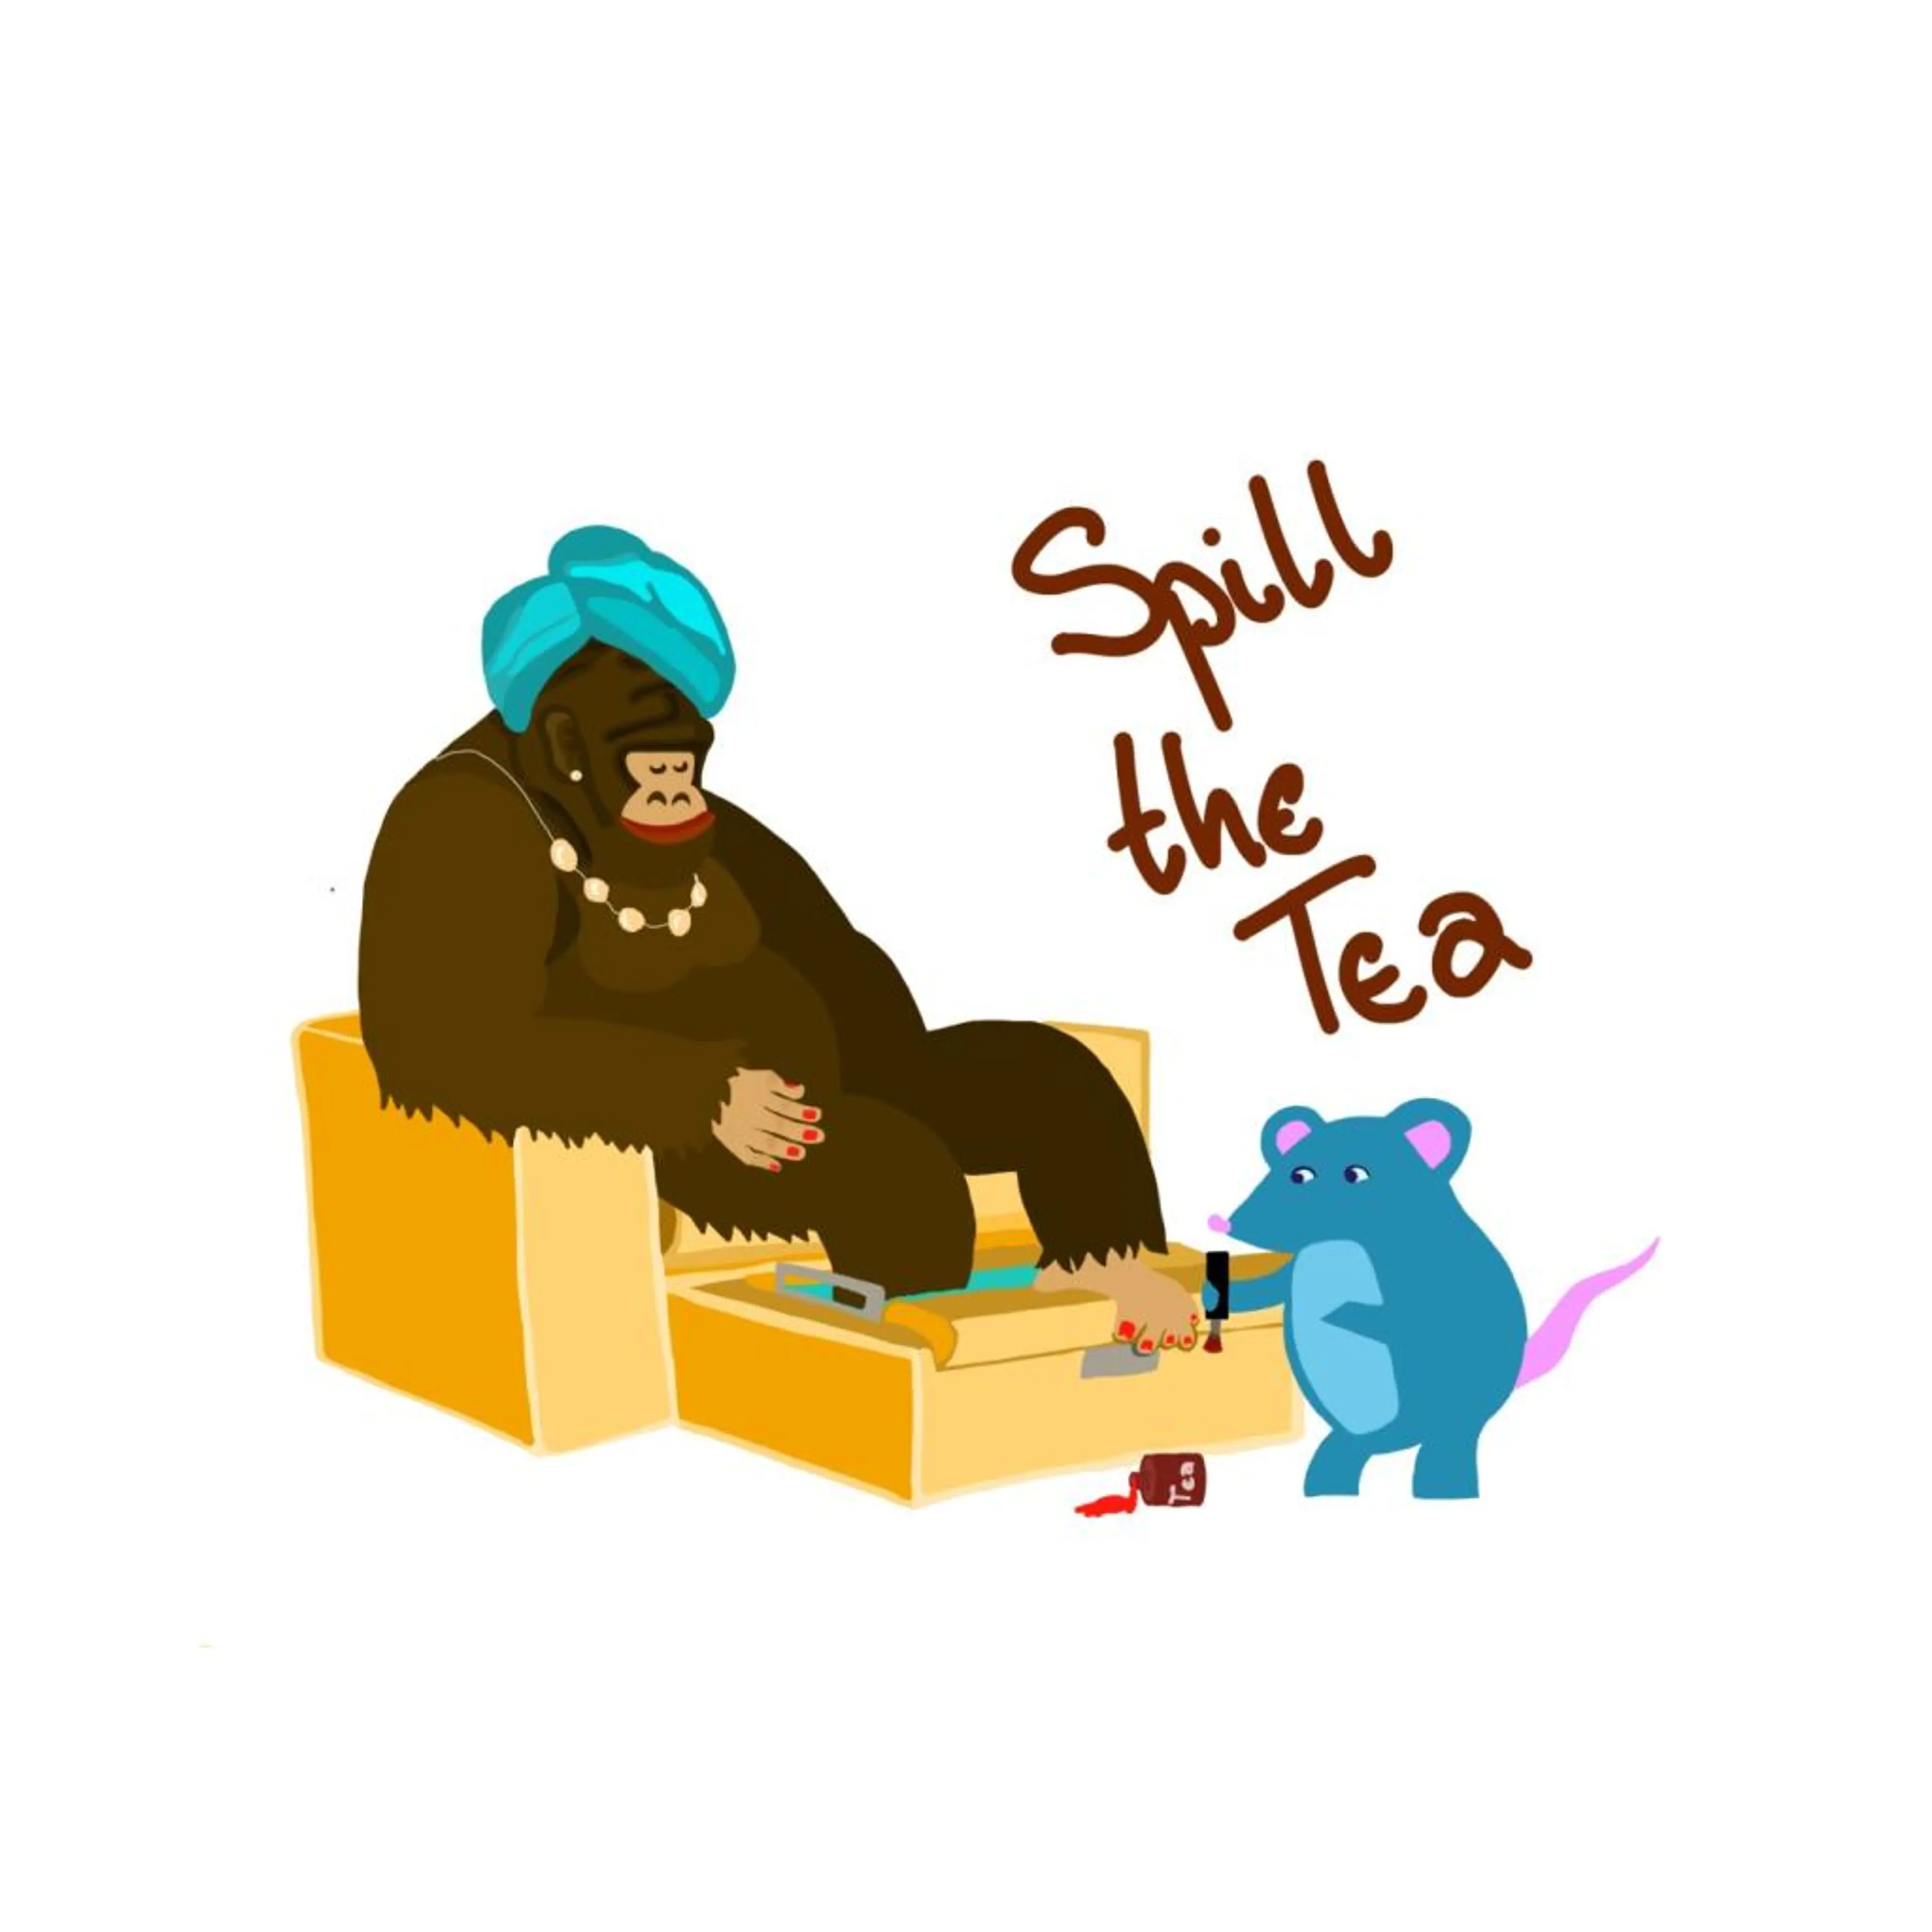 Spill the tea